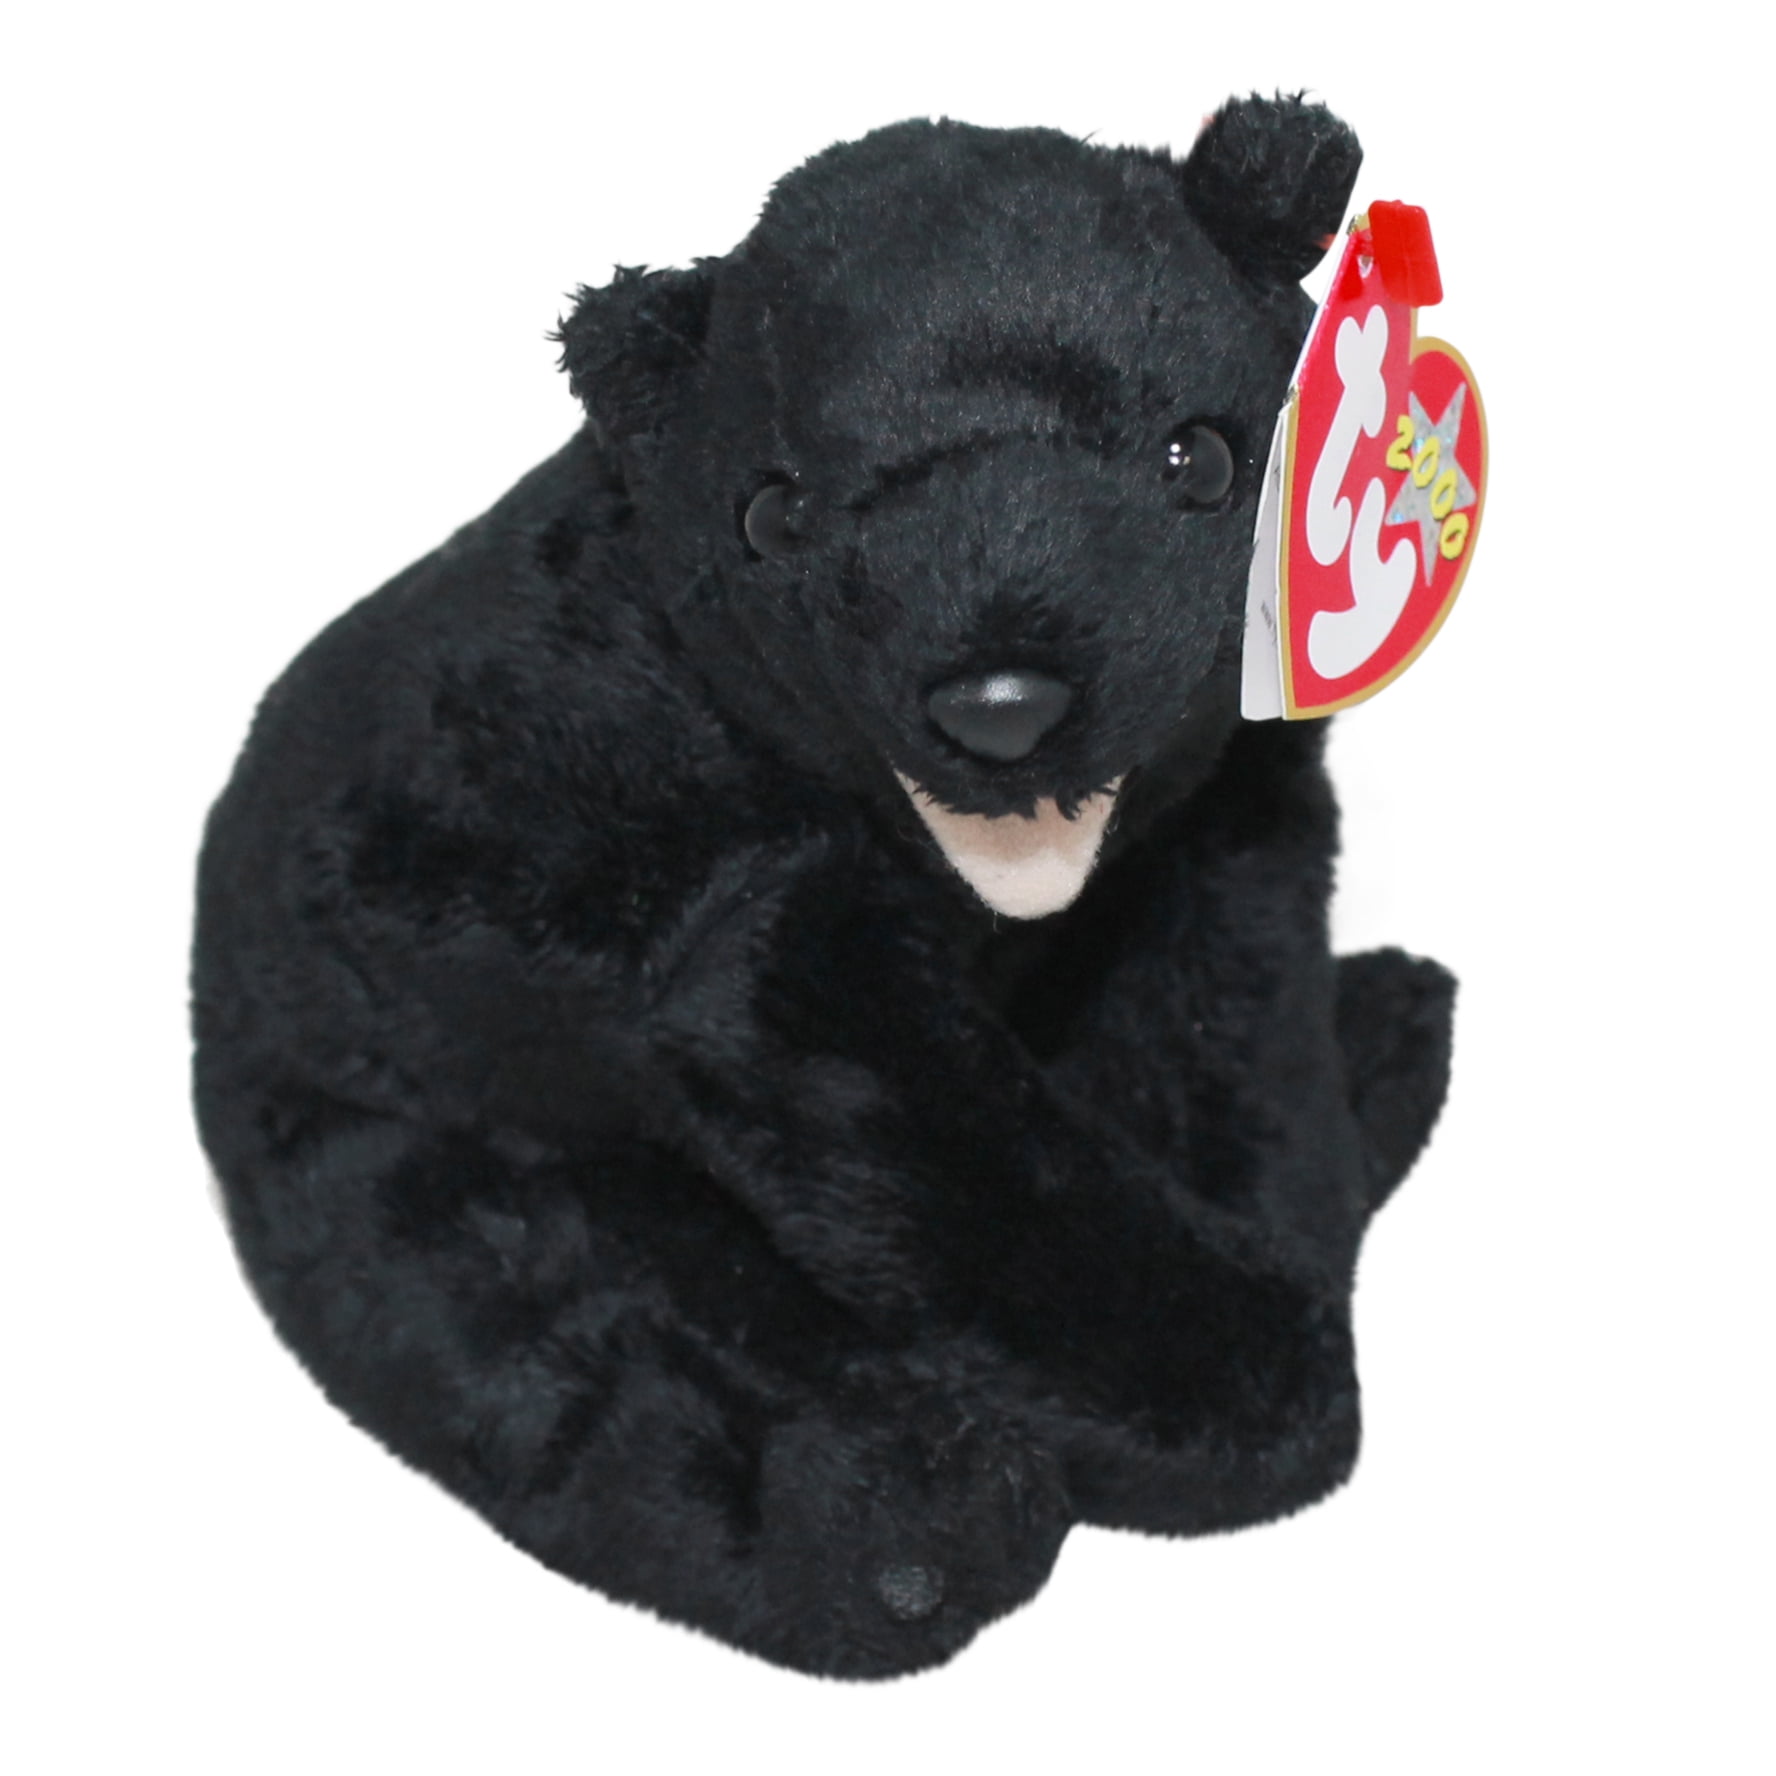 Ty Beanie Baby: Cinders the Black | Stuffed Animal | MWMT - Walmart.com